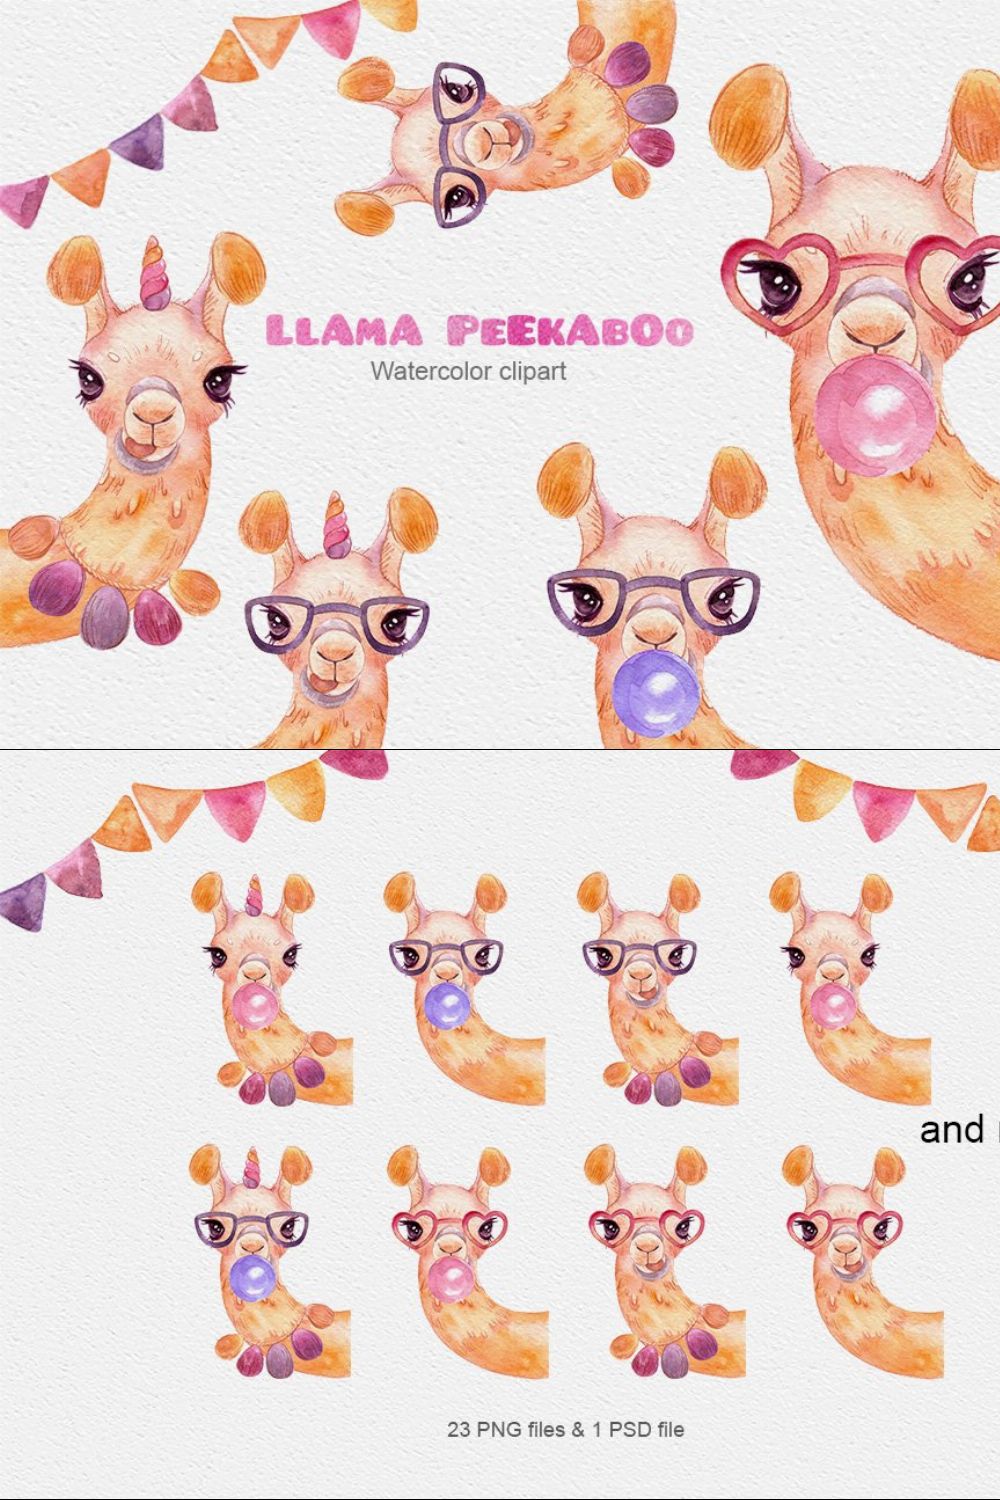 Llama peekaboo - watercolor clipart pinterest preview image.